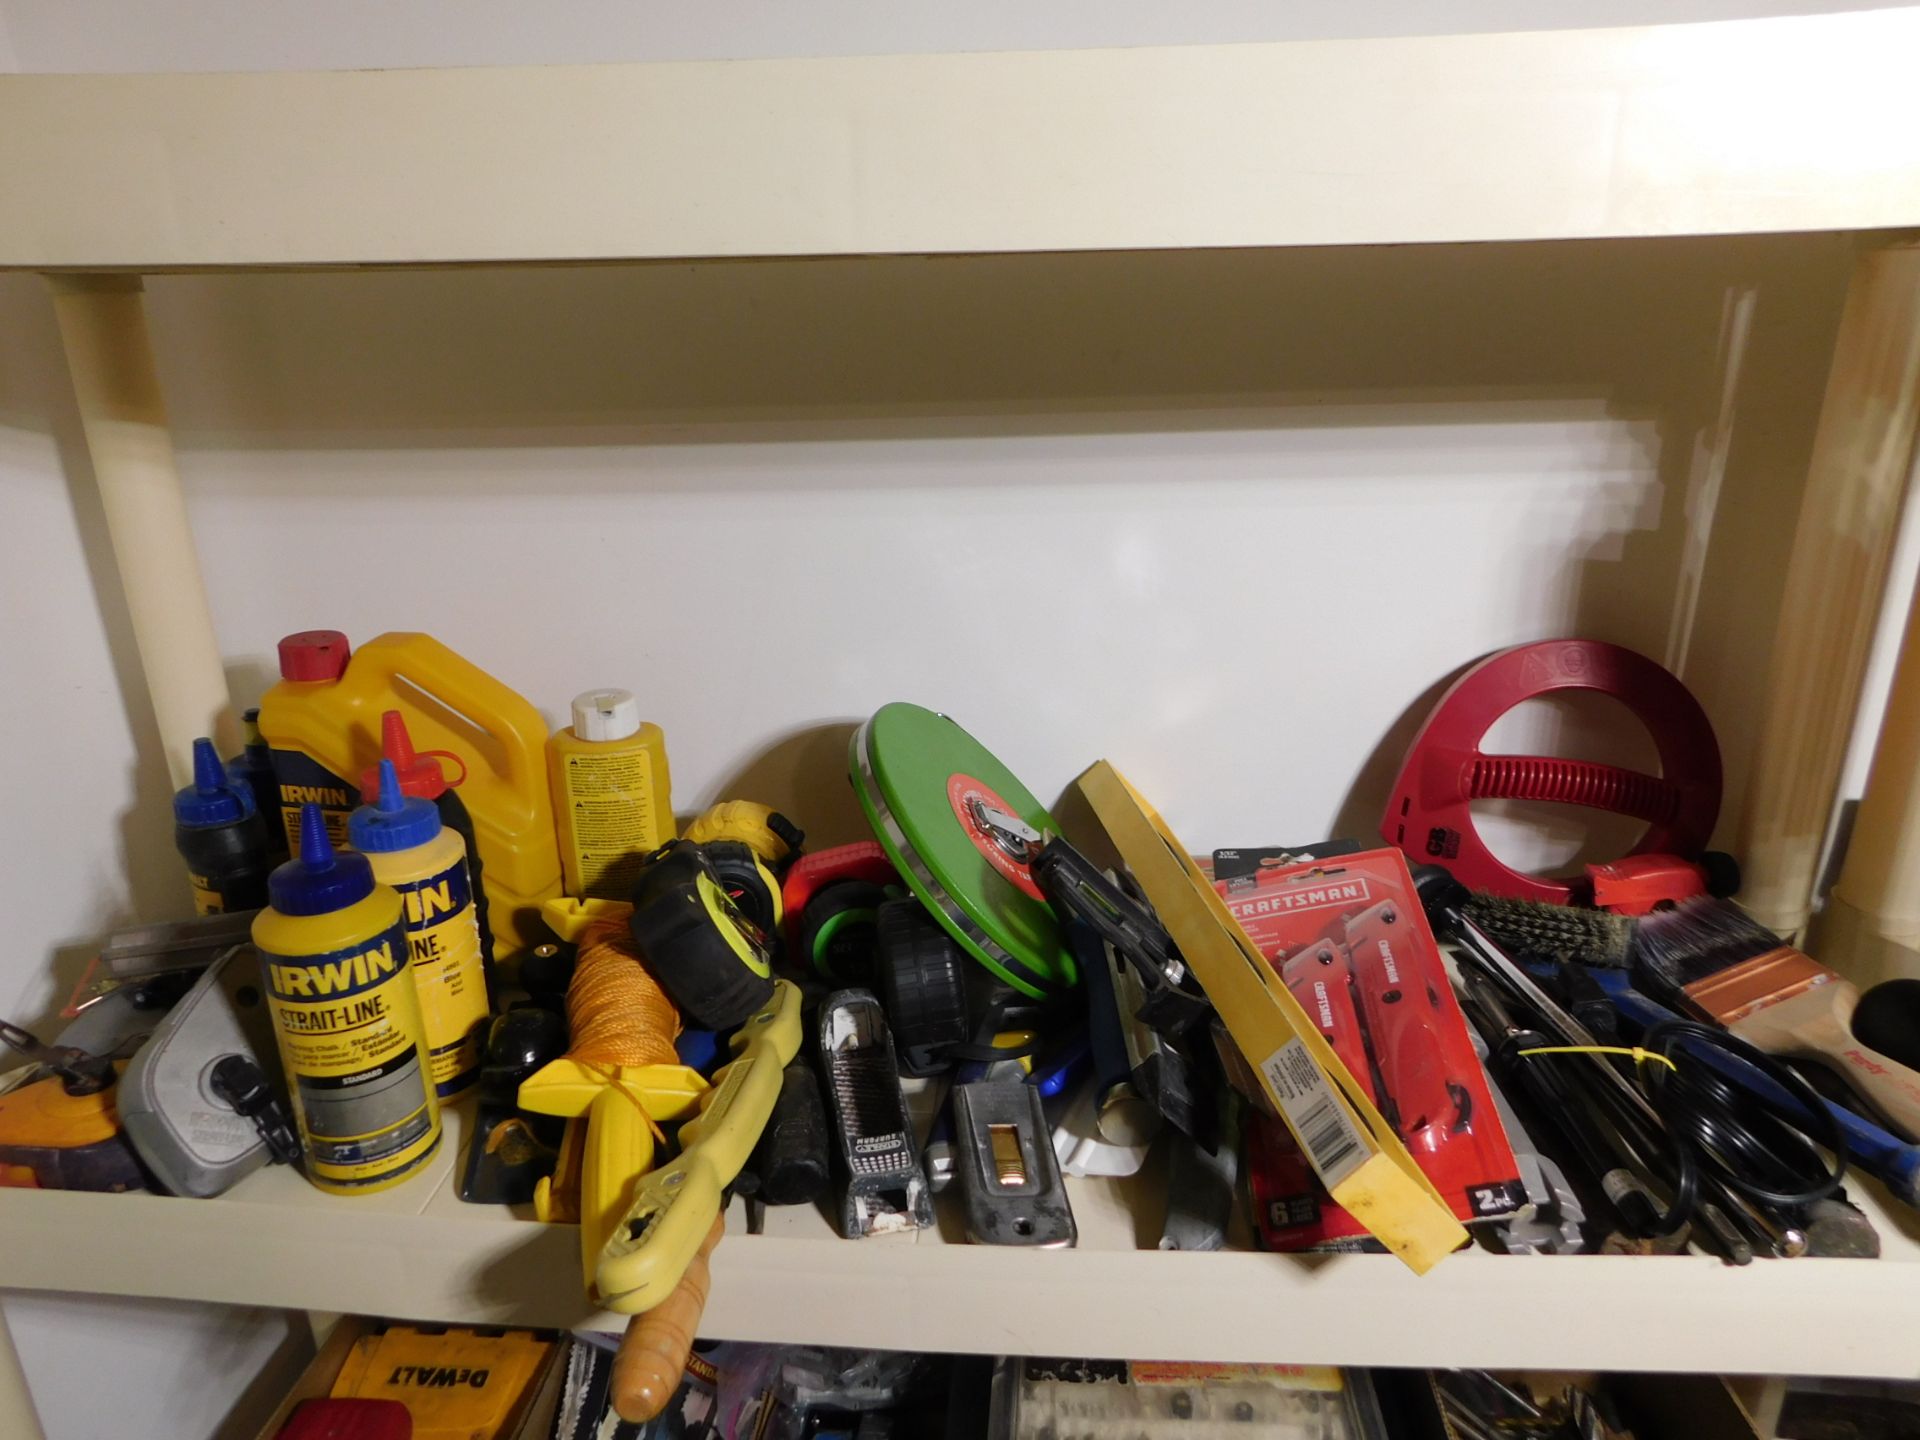 Contents of Shelf, Misc. Hand Tools